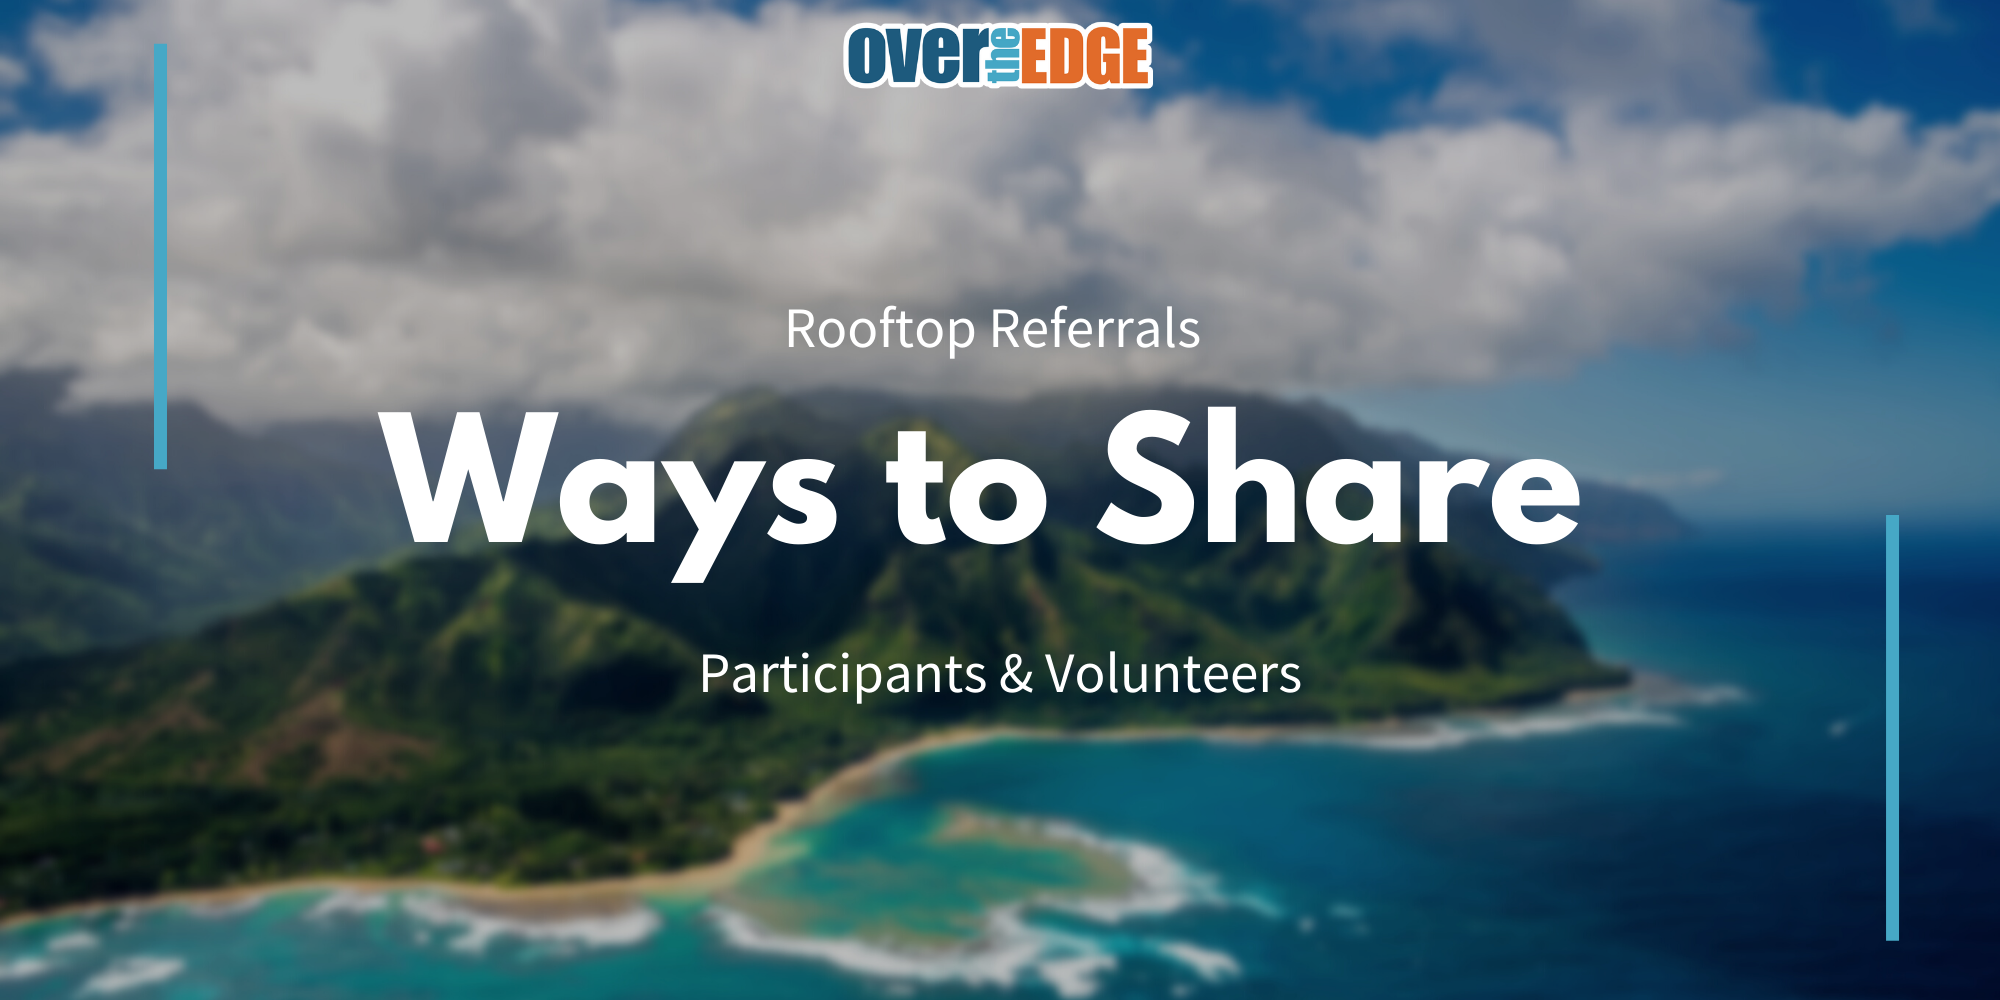 Participant and Volunteer referrals